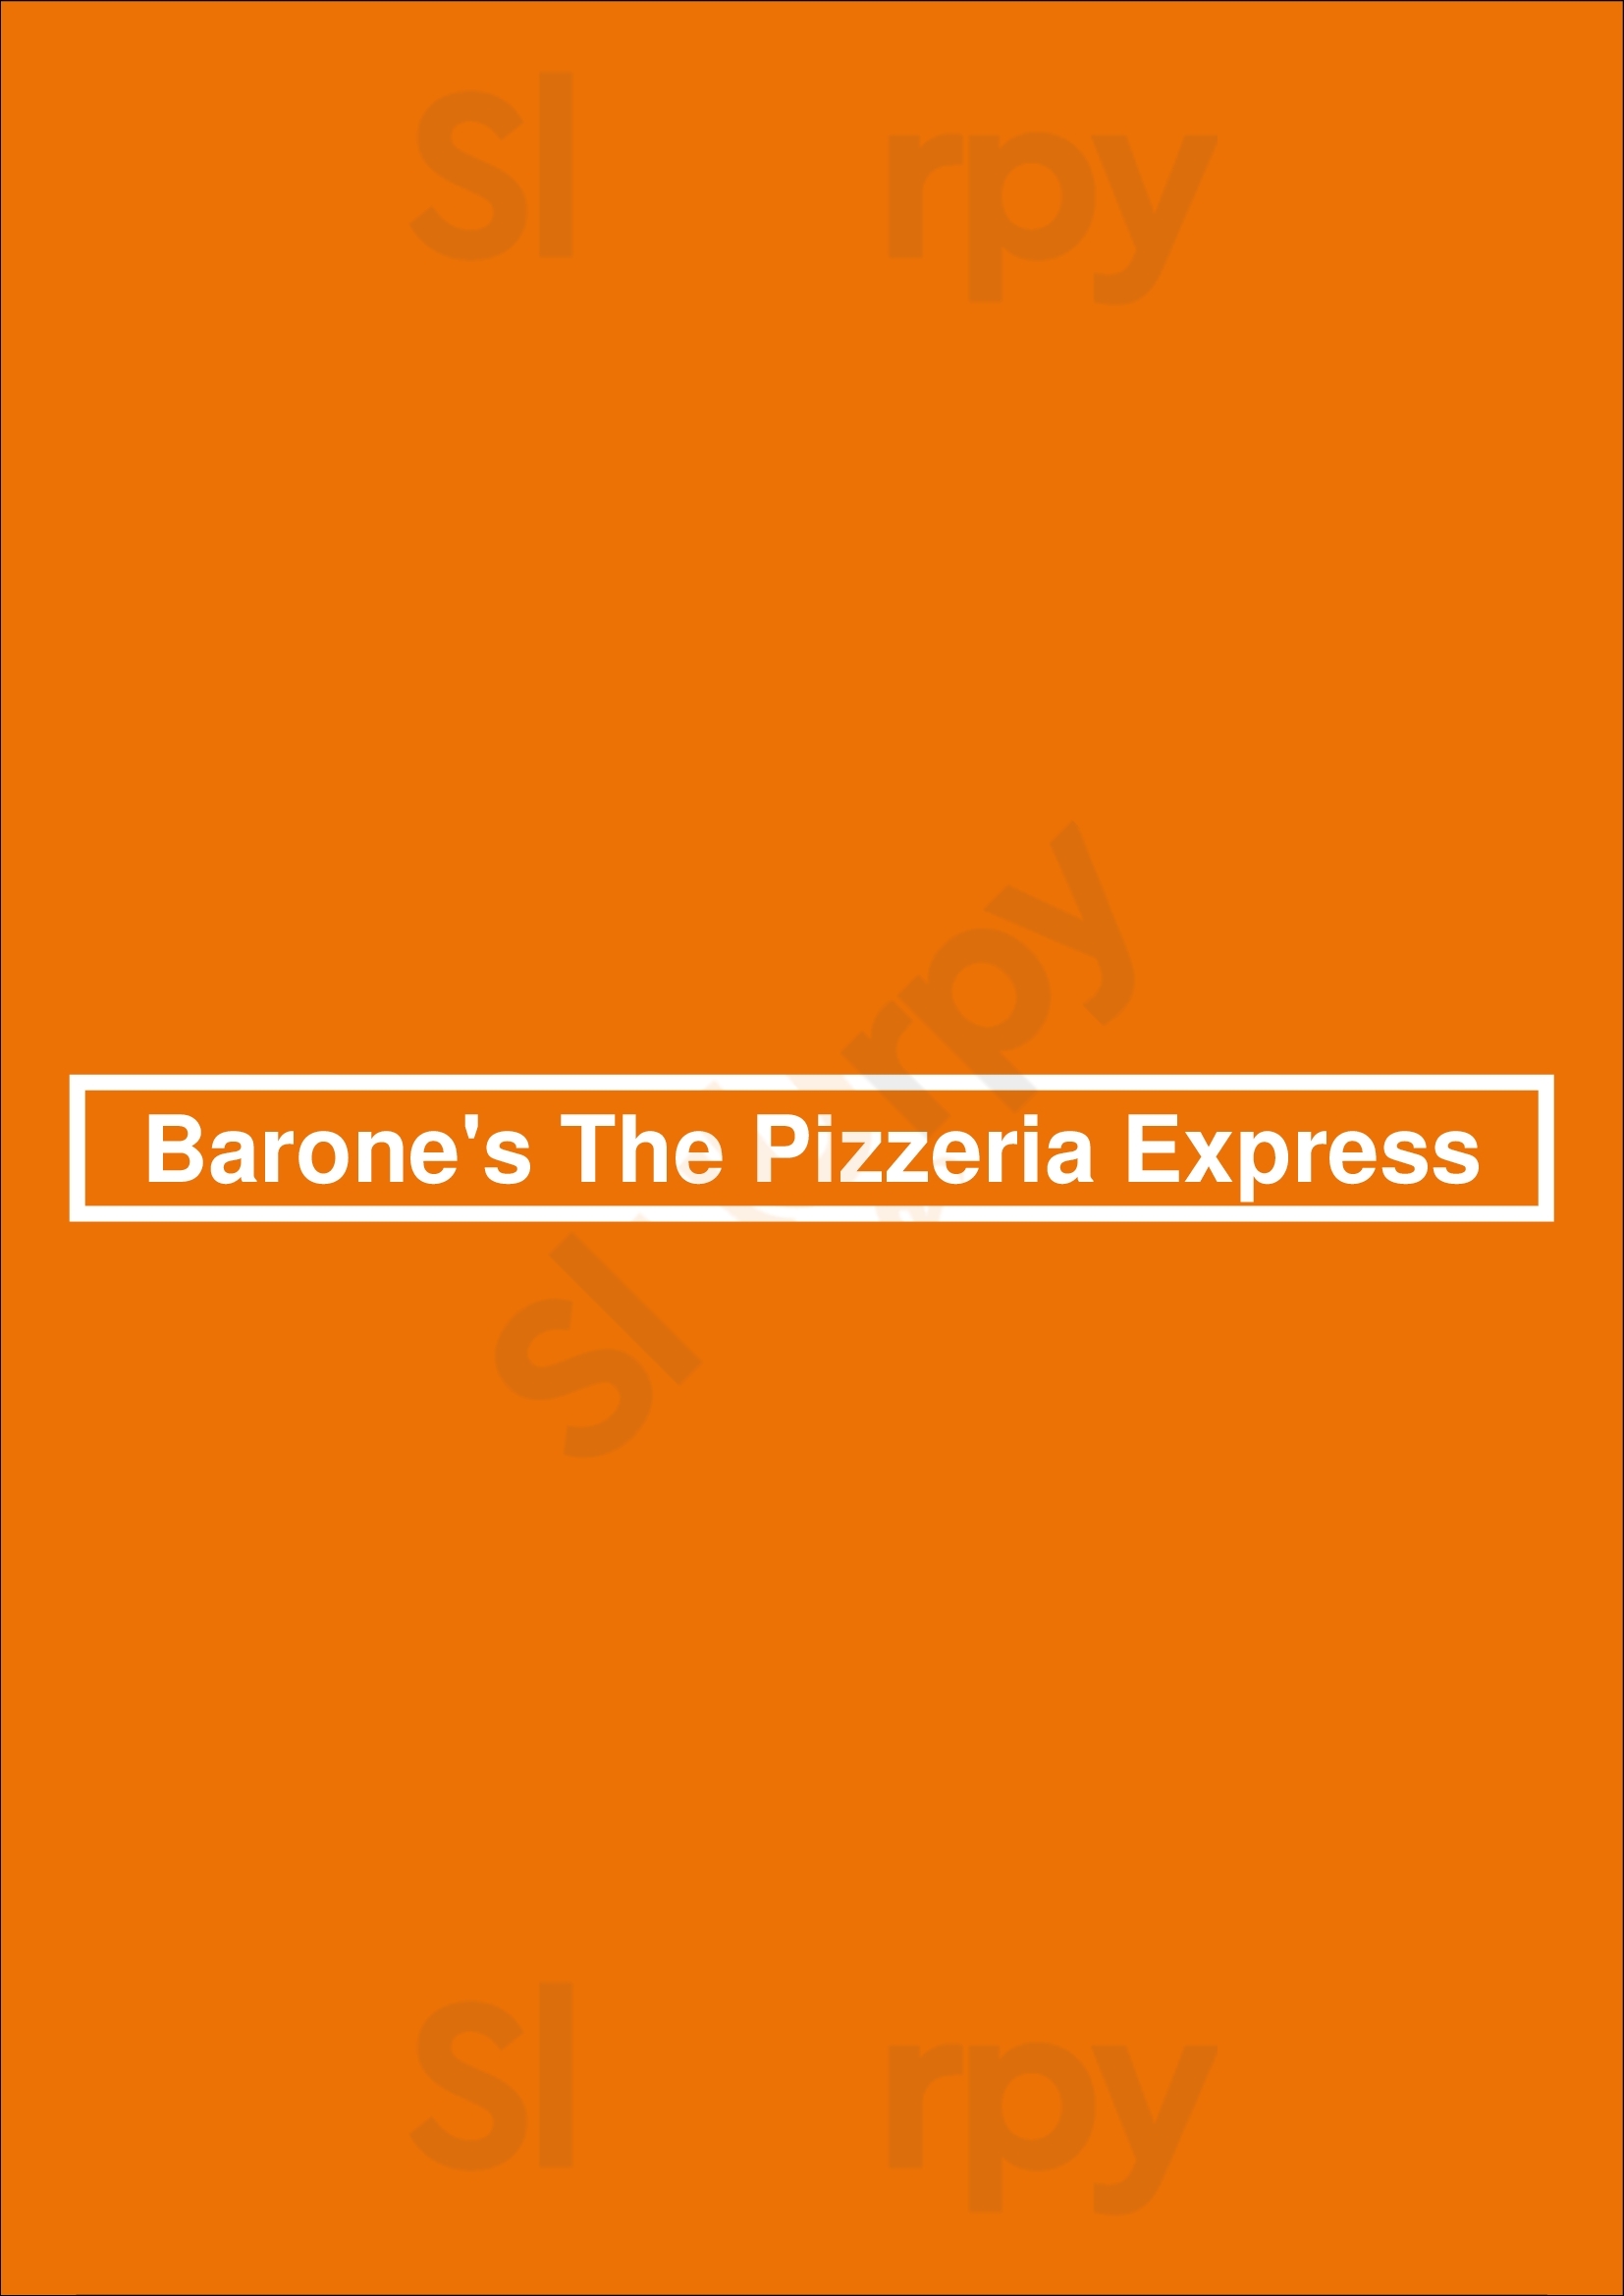 Barone's The Pizzeria Express Los Angeles Menu - 1